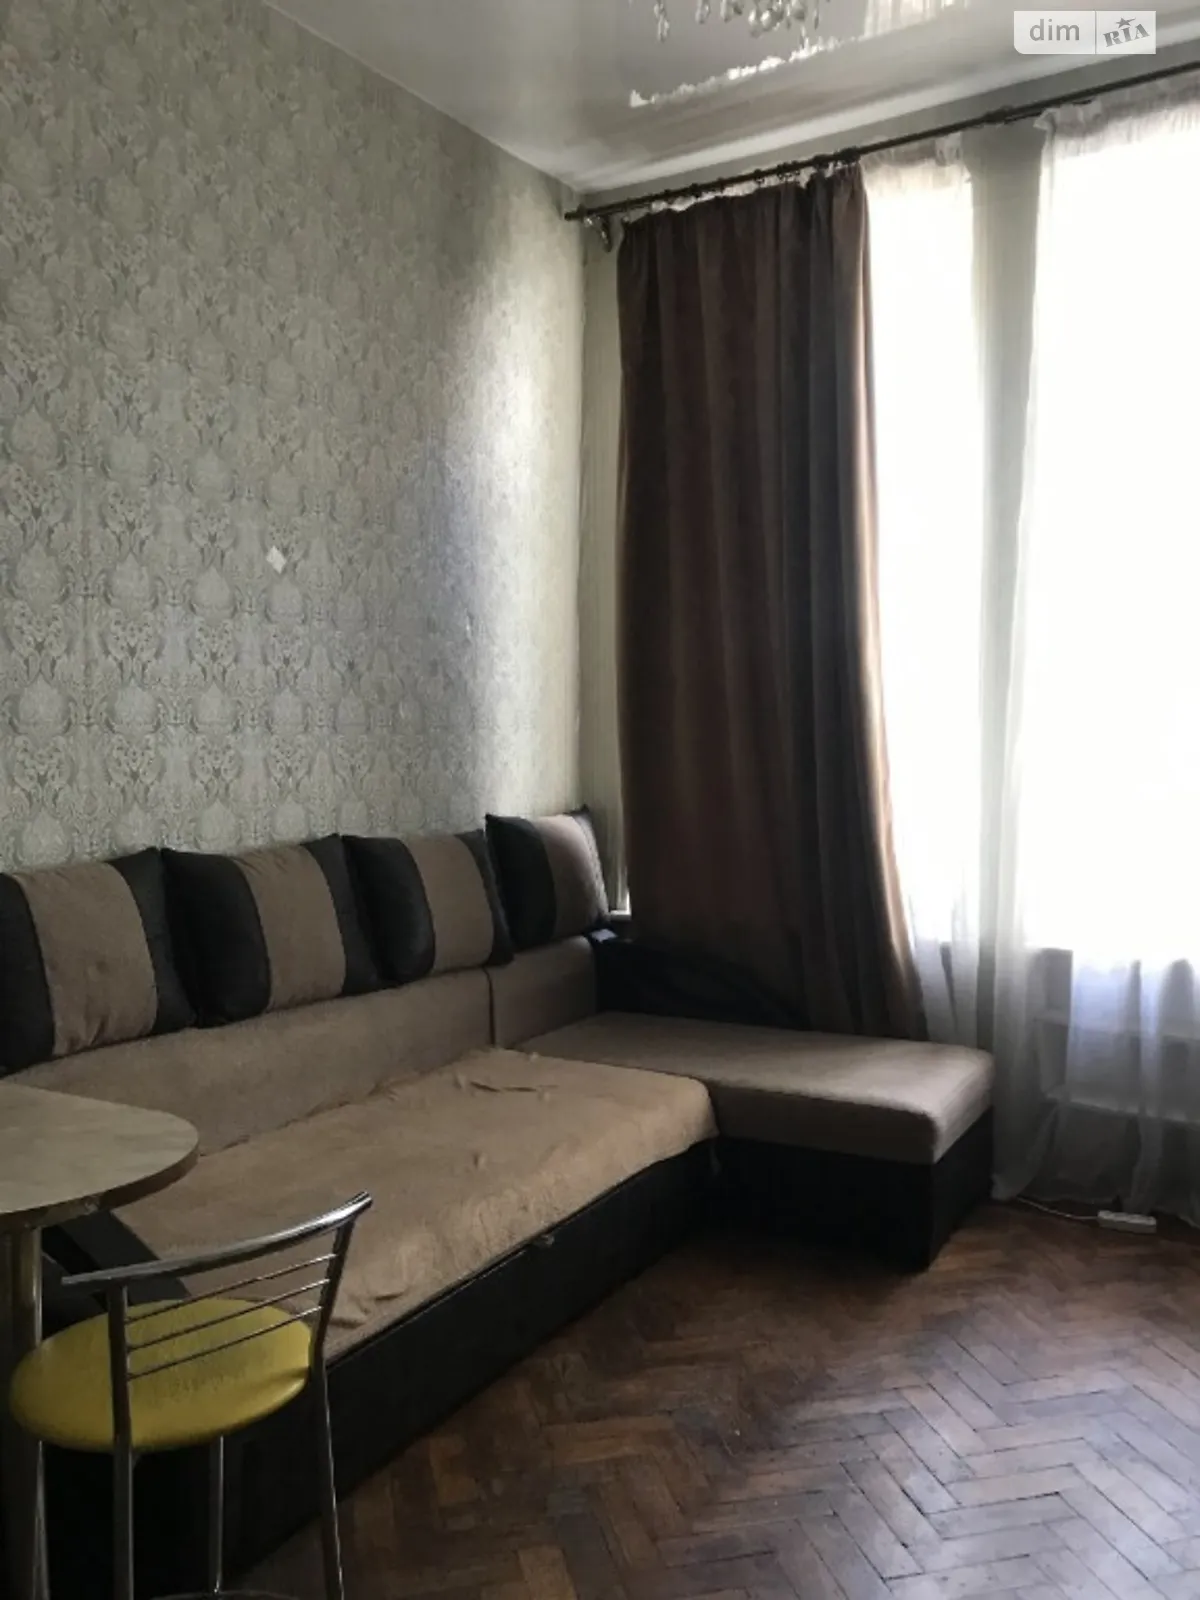 Продается комната 152 кв. м в Одессе, цена: 14500 $ - фото 1